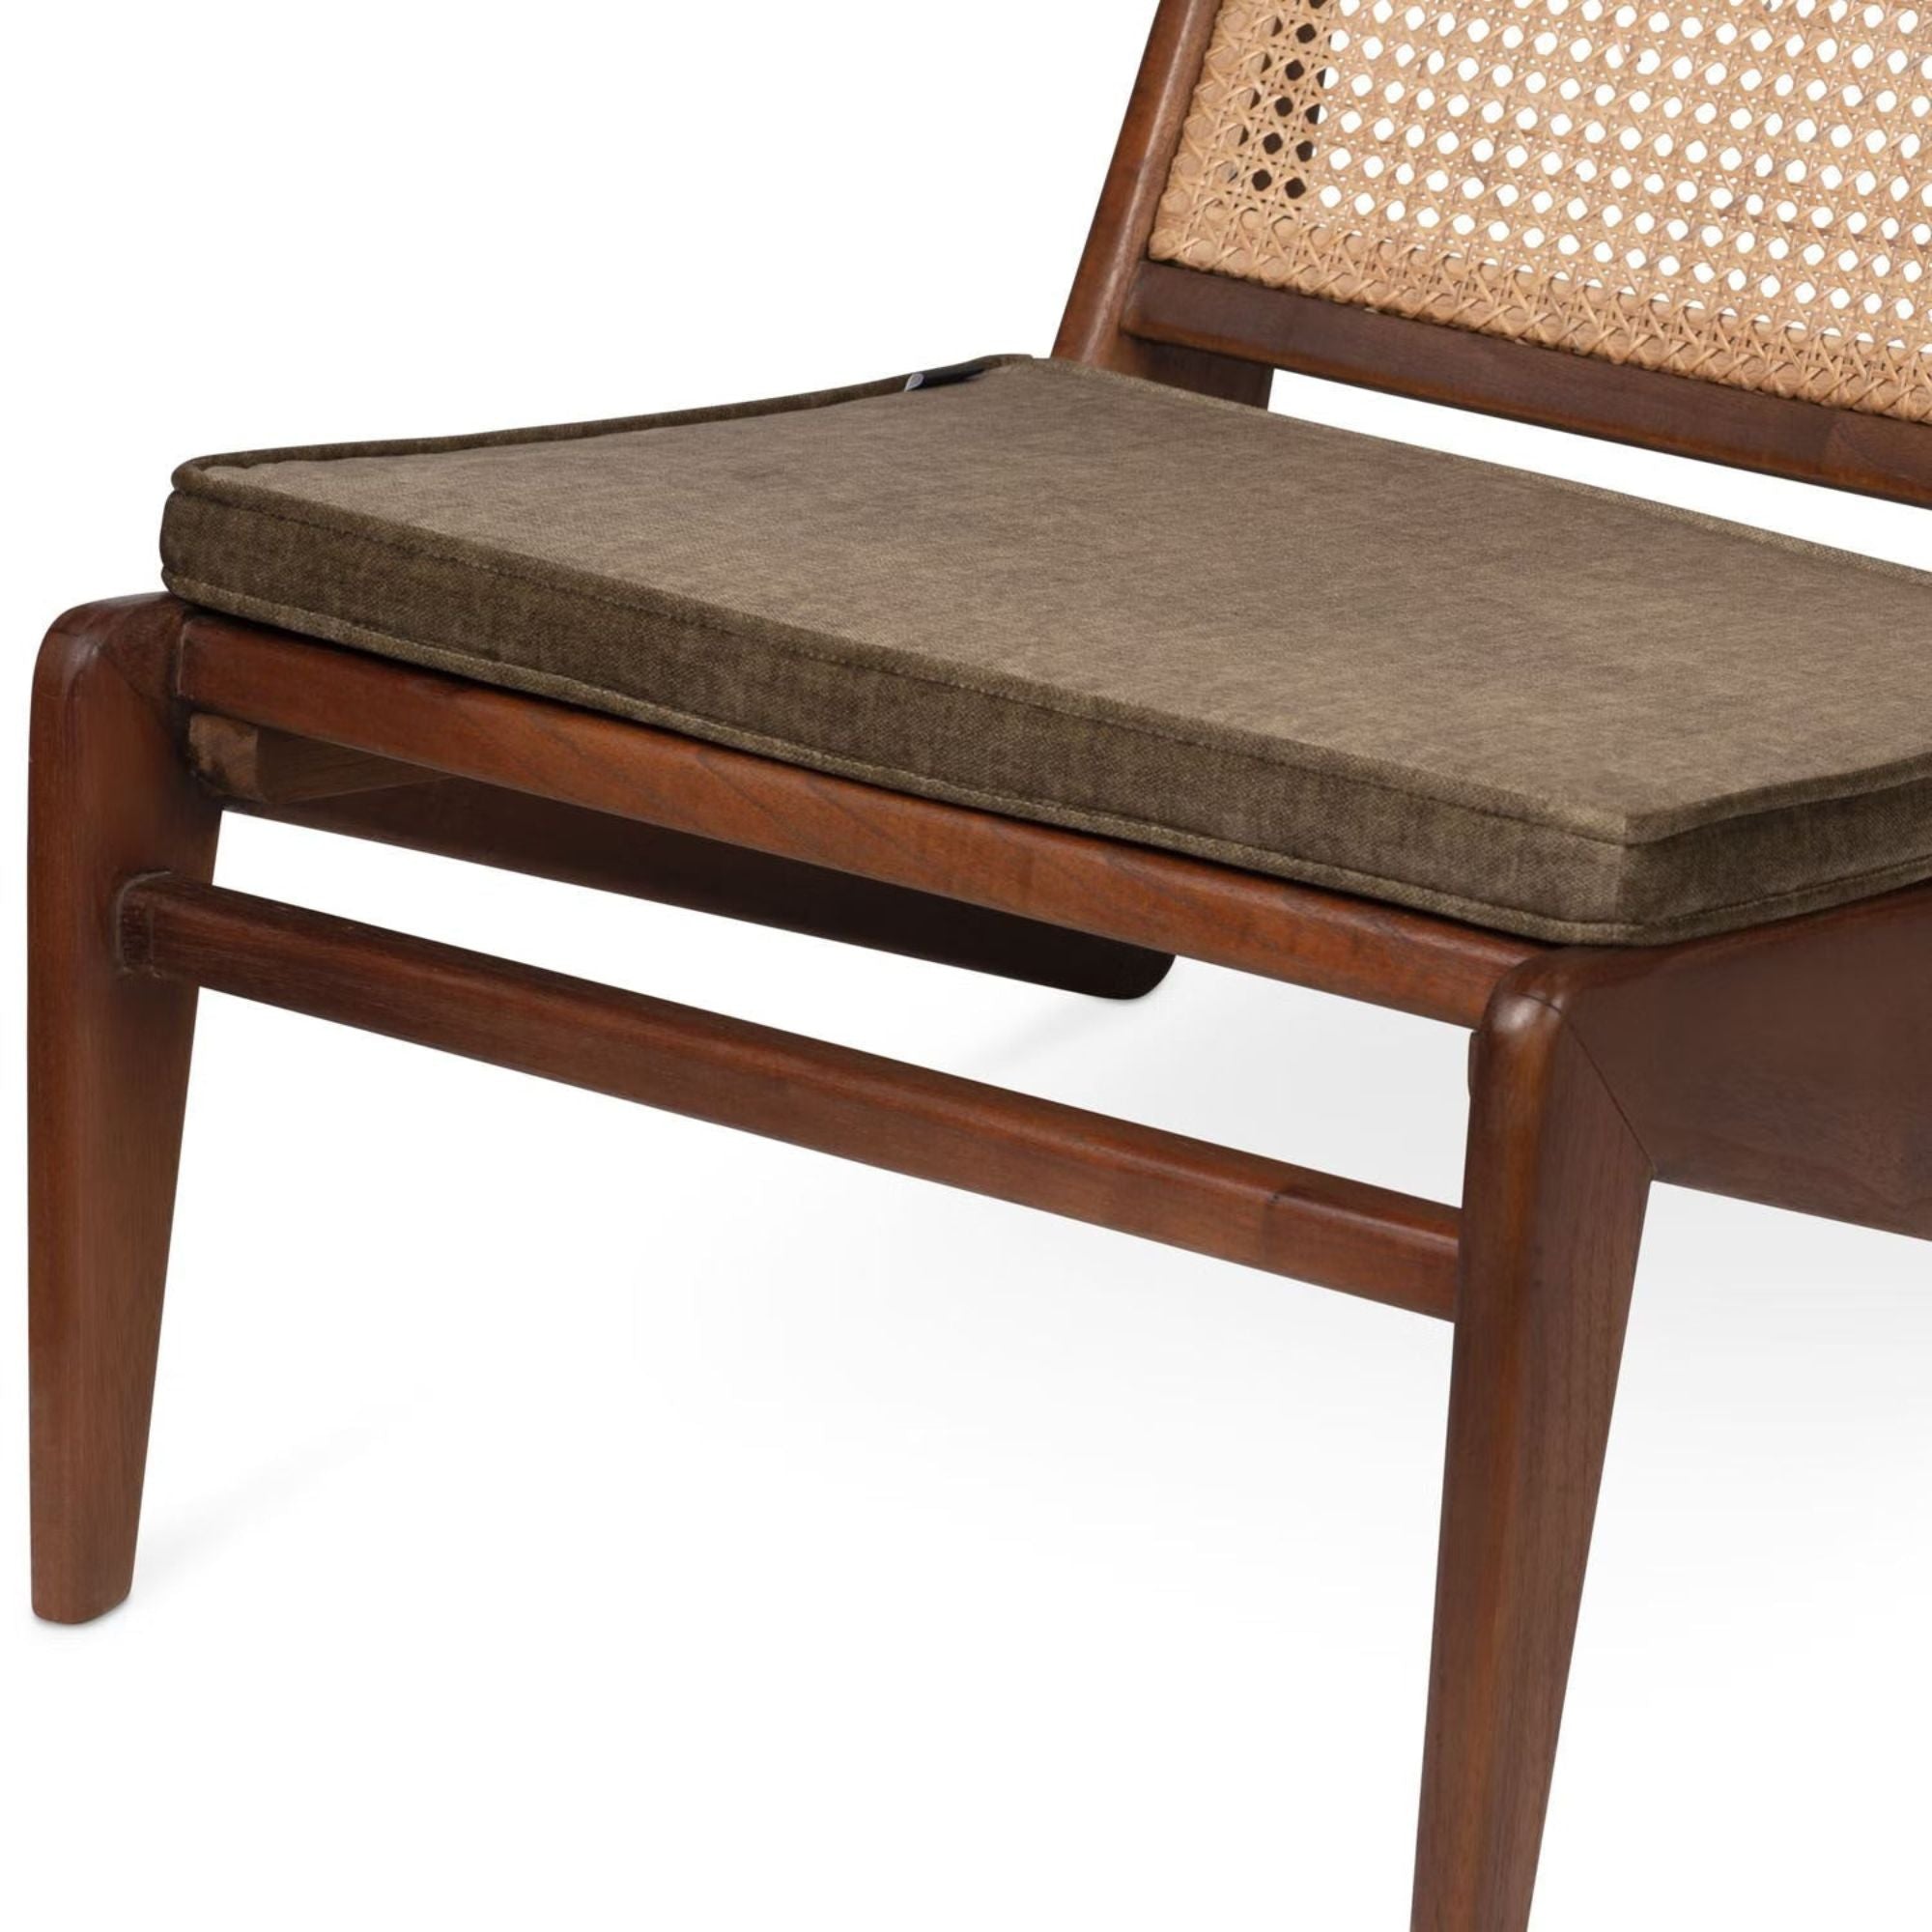 Cushion for Kangaroo Chair - THAT COOL LIVING